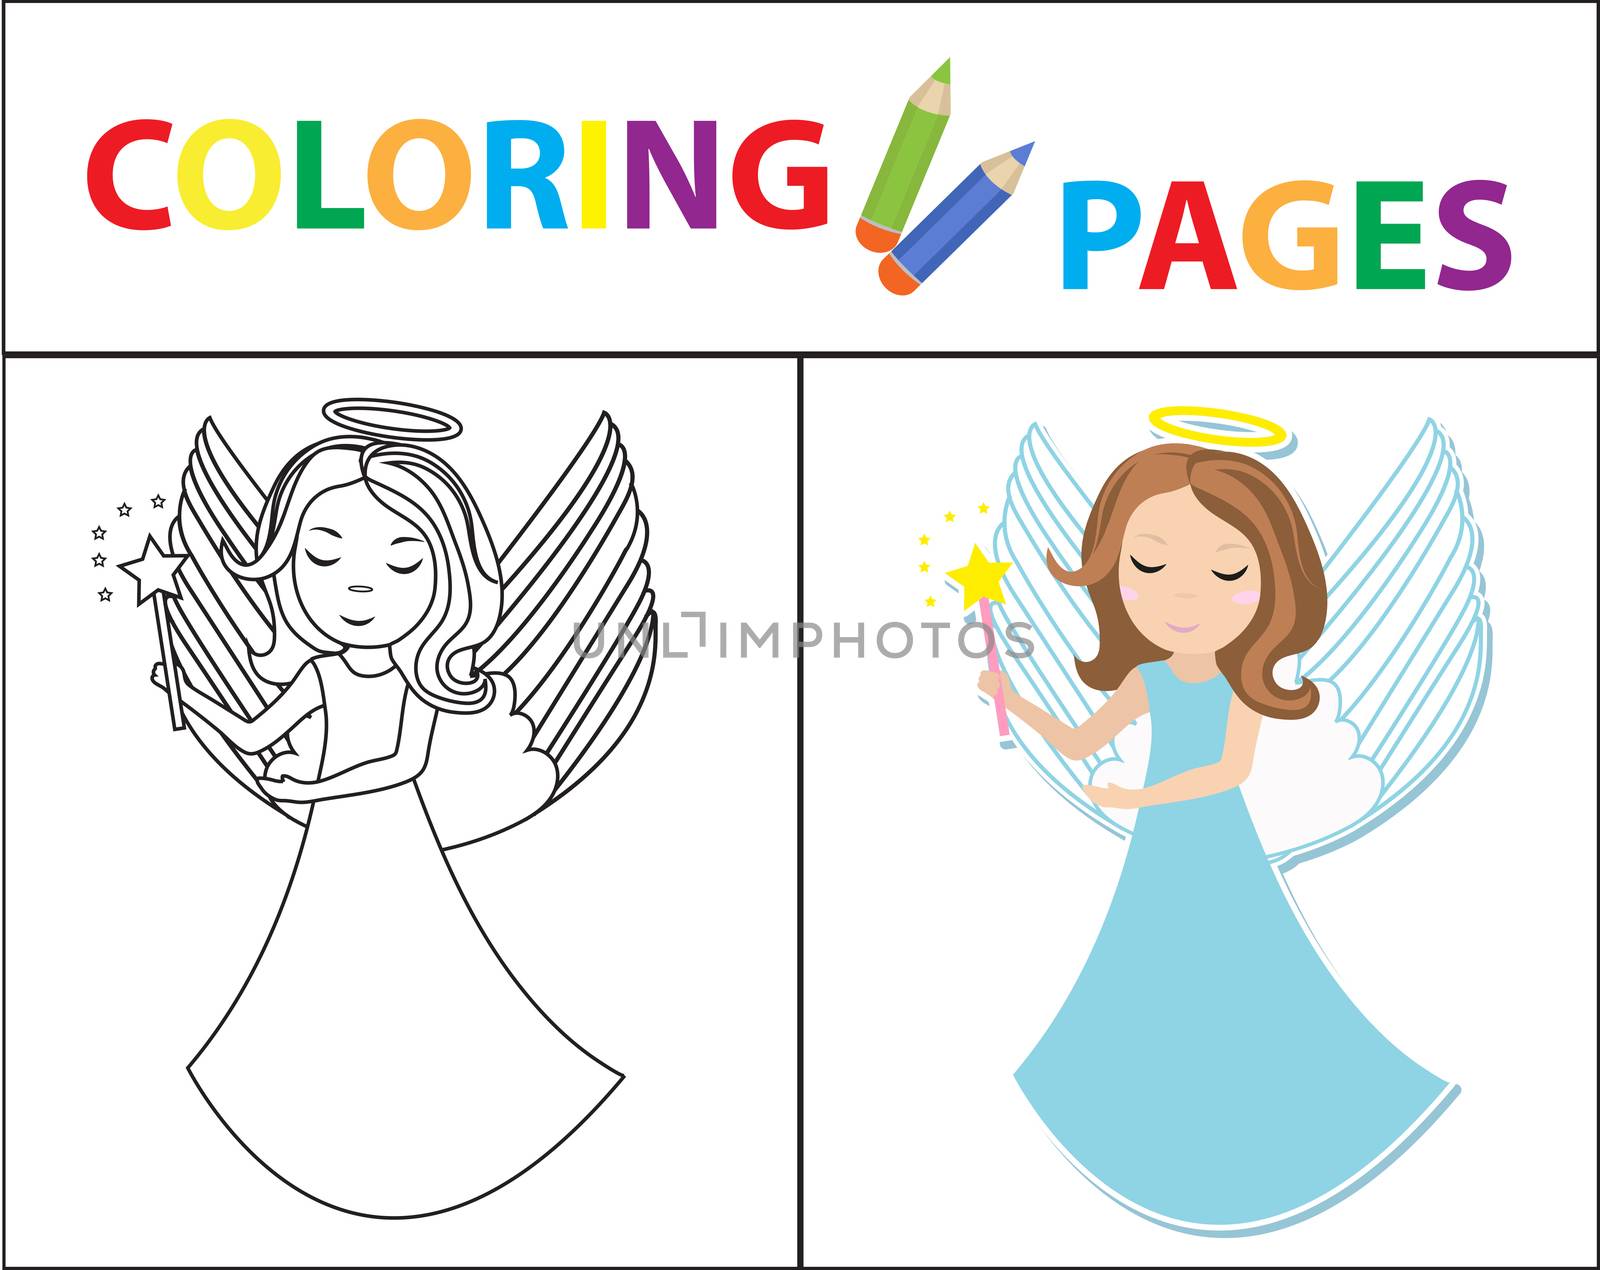 Coloring book page for kids. Angel little girl. Sketch outline and color version. Childrens education. illustration